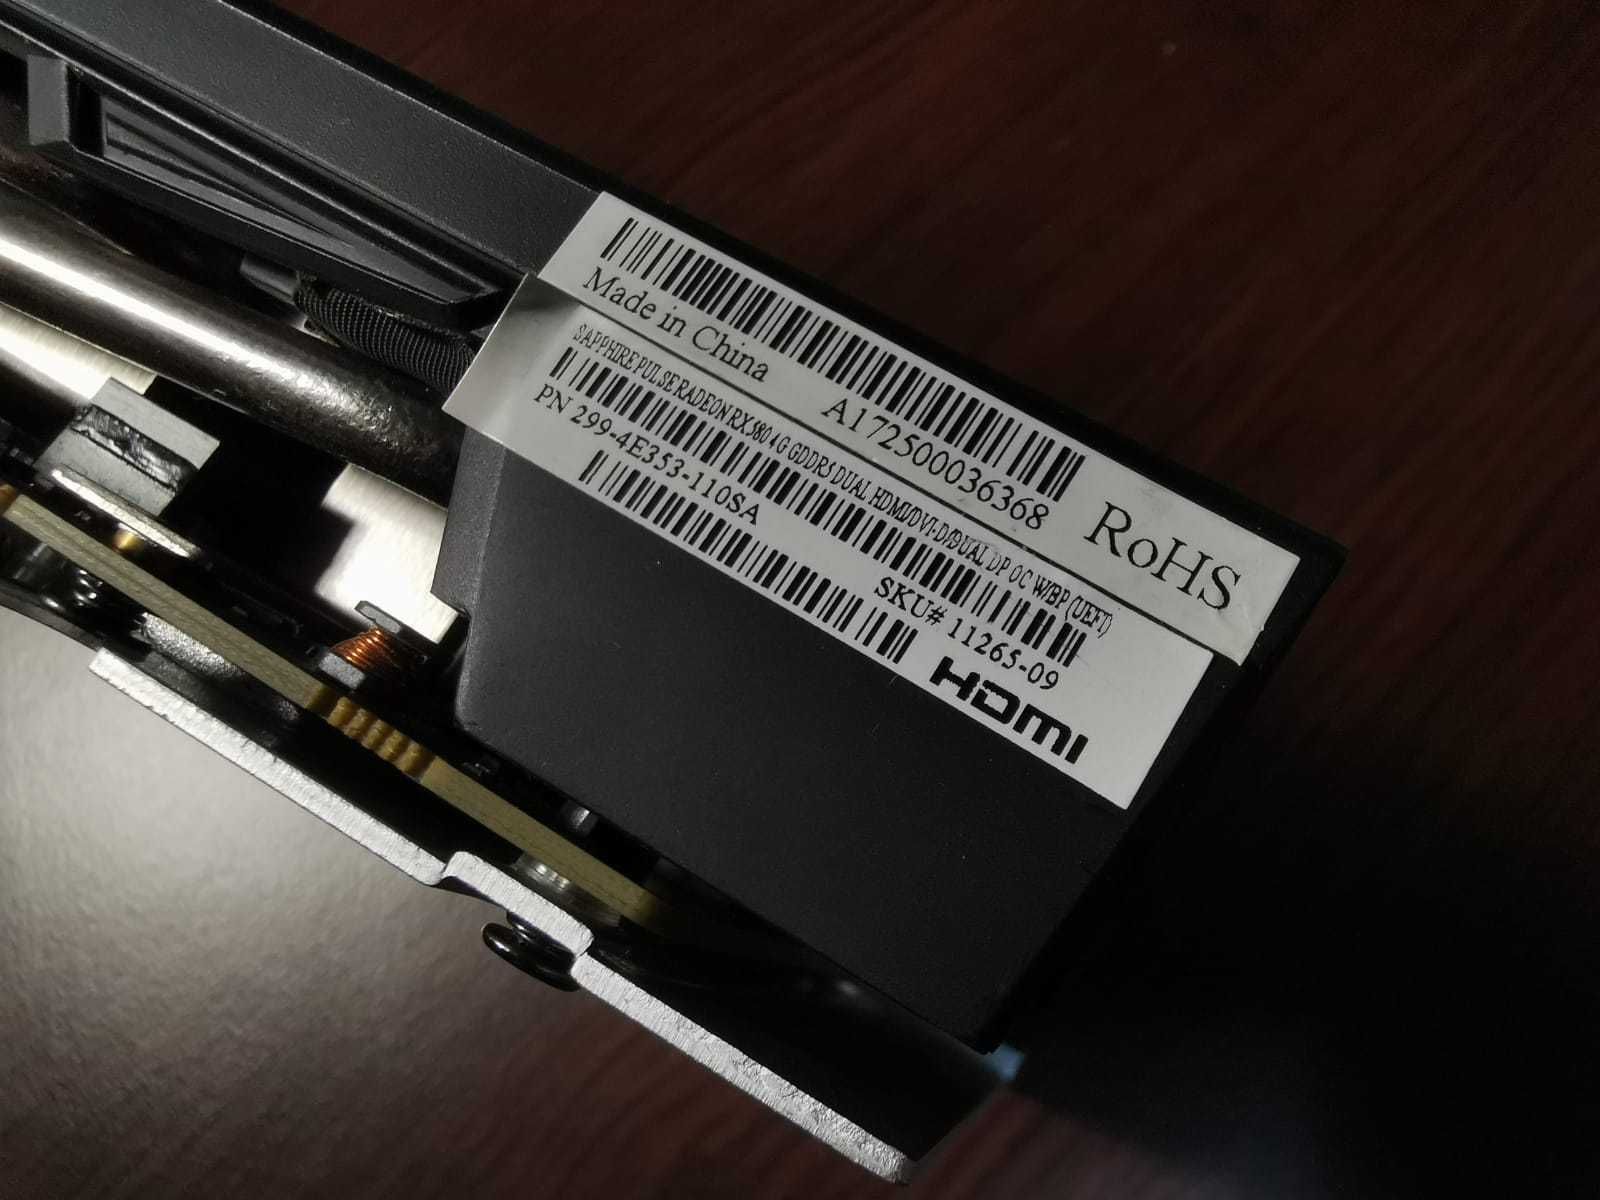 Placa VIdeo Sapphire AMD Radeon RX 580 PULSE 4GB